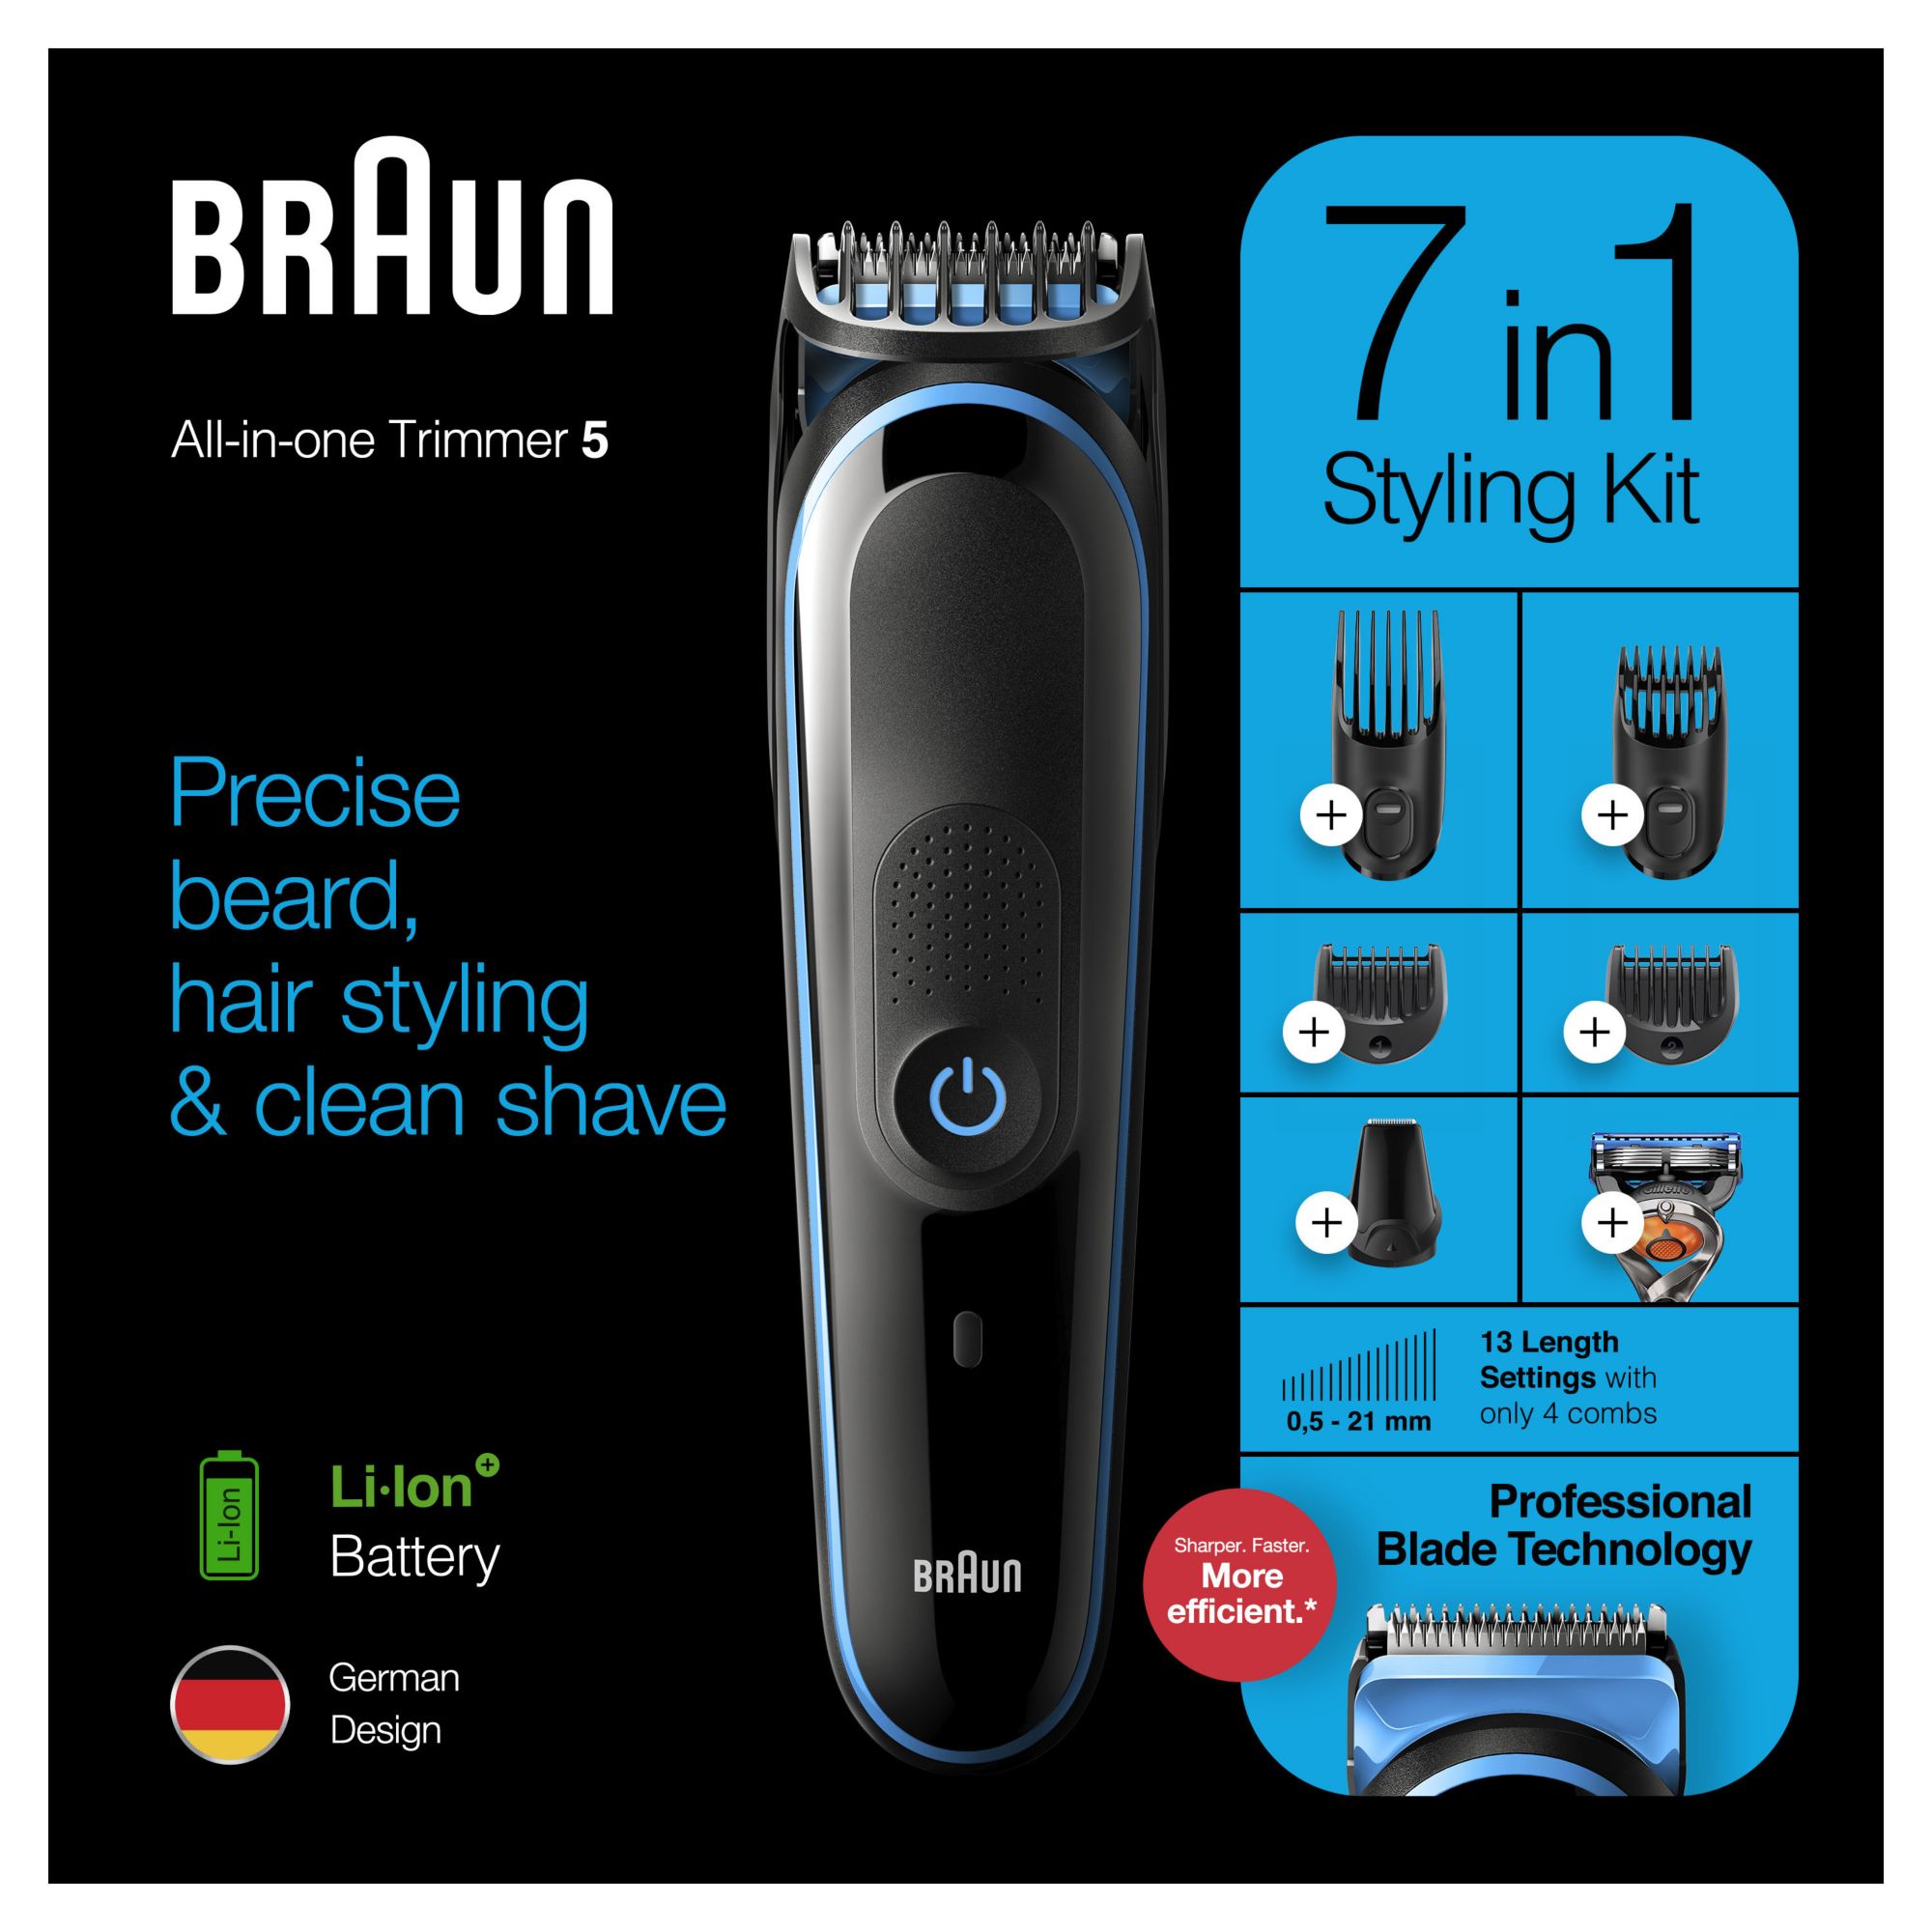 BRAUN Male Hair Removal Braun Shaver Mbs9 Blk, Braun